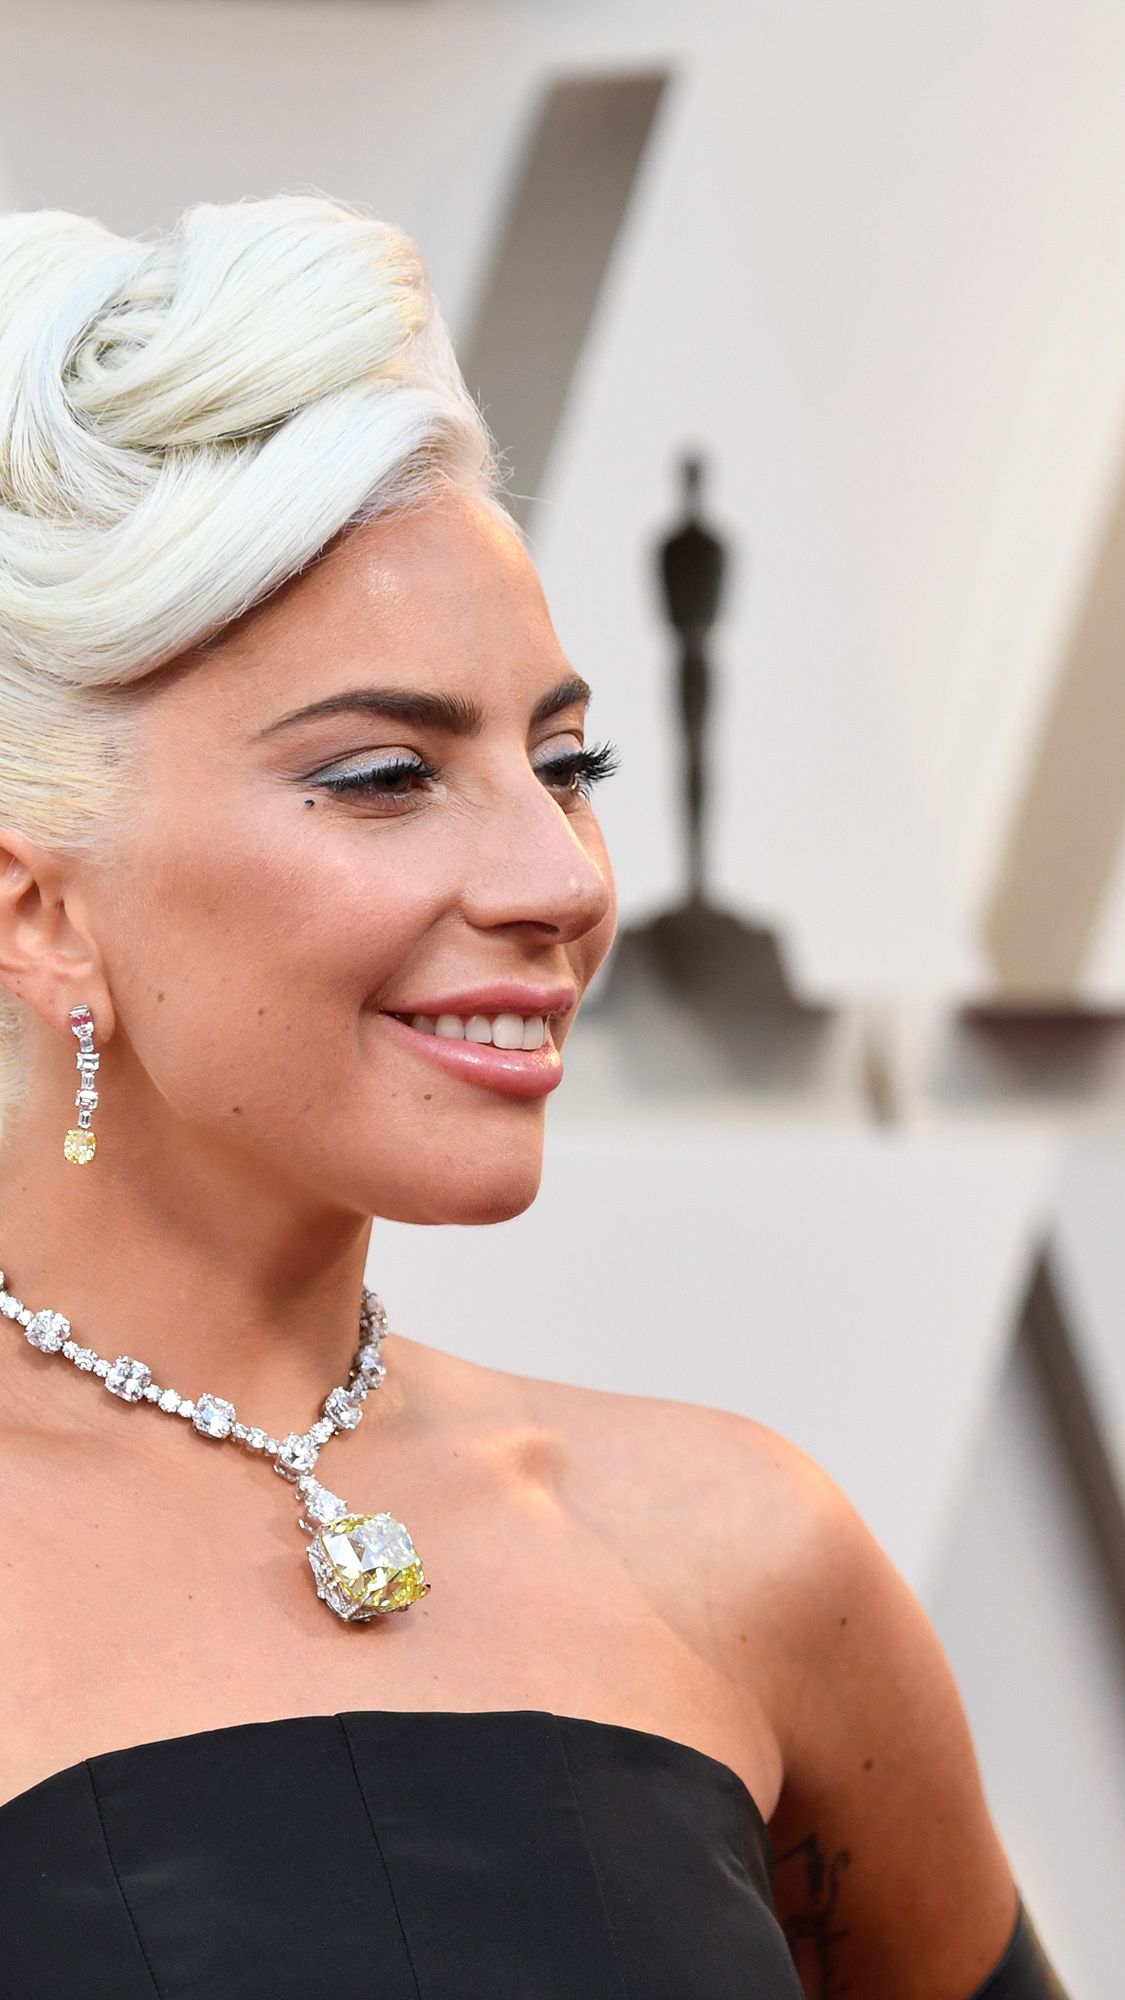 Lady Gaga Close Up Pussy - Oscars 2019: Best fashion on the red carpet | CNN